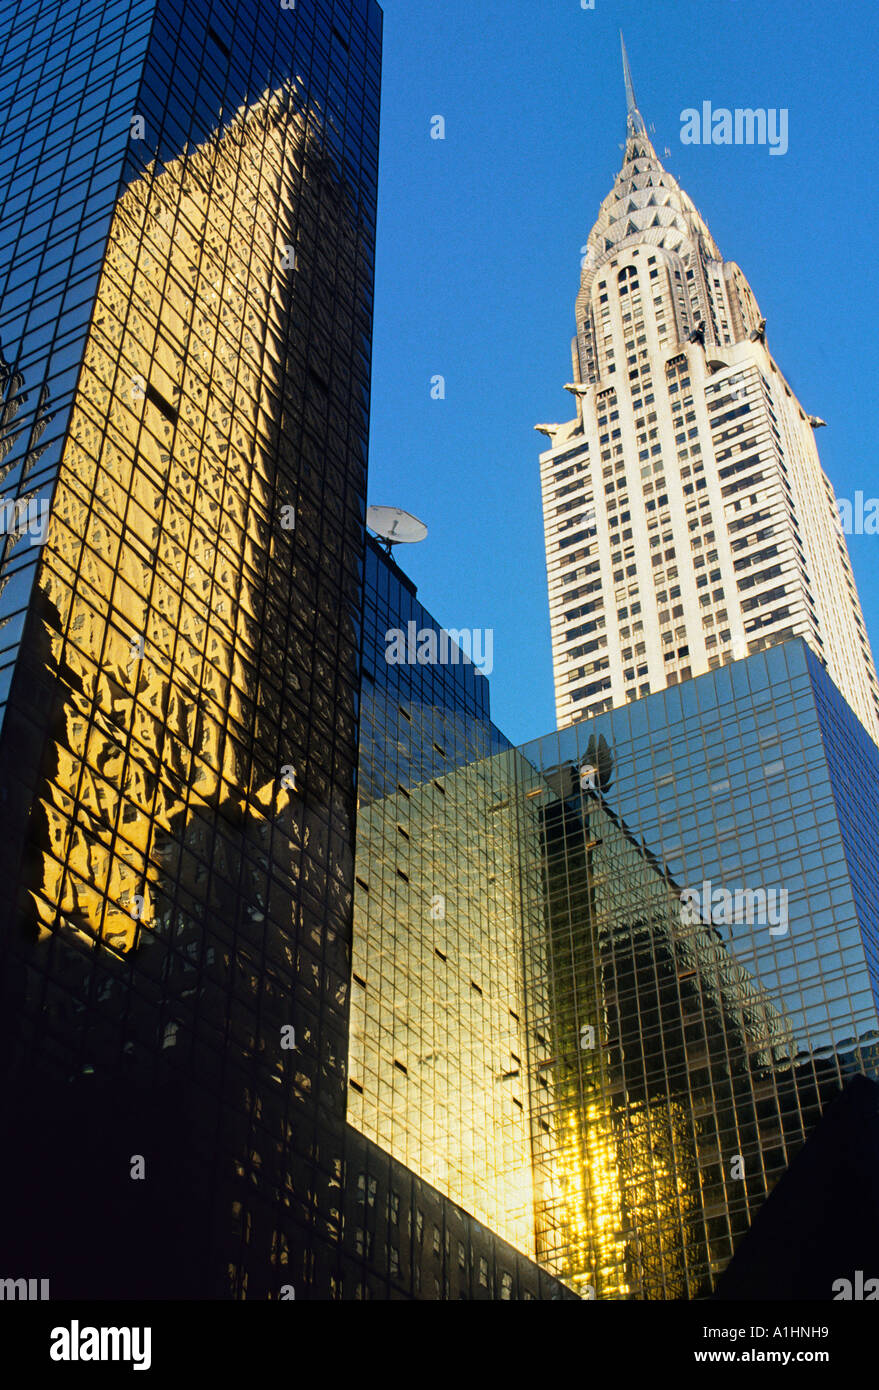 Le gratte-ciel du Chrysler Building New York et la façade moderne en verre du Grand Hyatt Hotel. Midtown Manhattan, New York. Immobilier commercial Banque D'Images